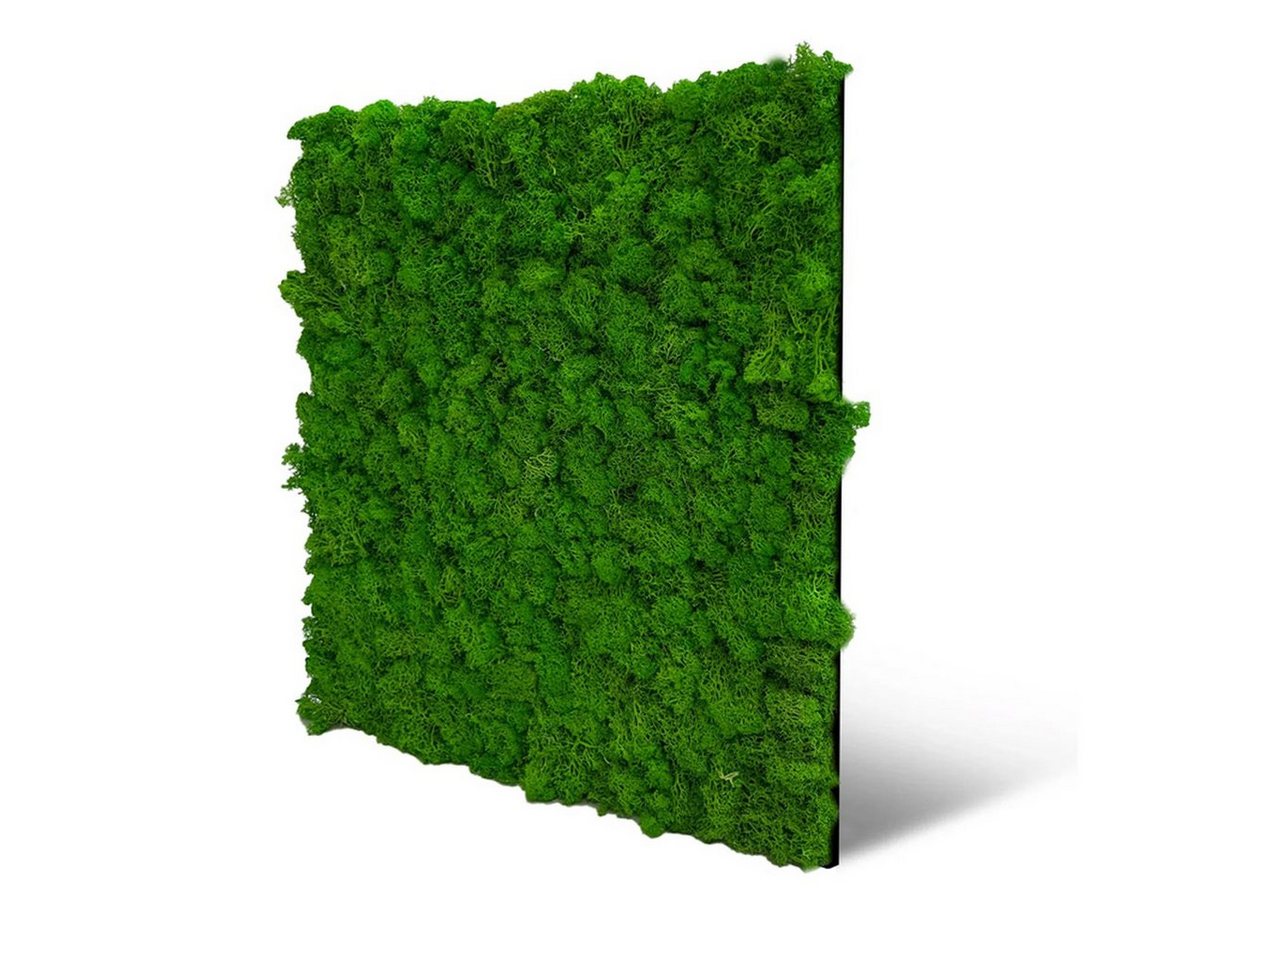 IKHEMalarka 3D Wandpaneel Moos 3D Paneelen Mooswand Wandpaneele, BxL: 52,00x52,00 cm, 0,27 qm, (1 Stück, 0,27m) von IKHEMalarka